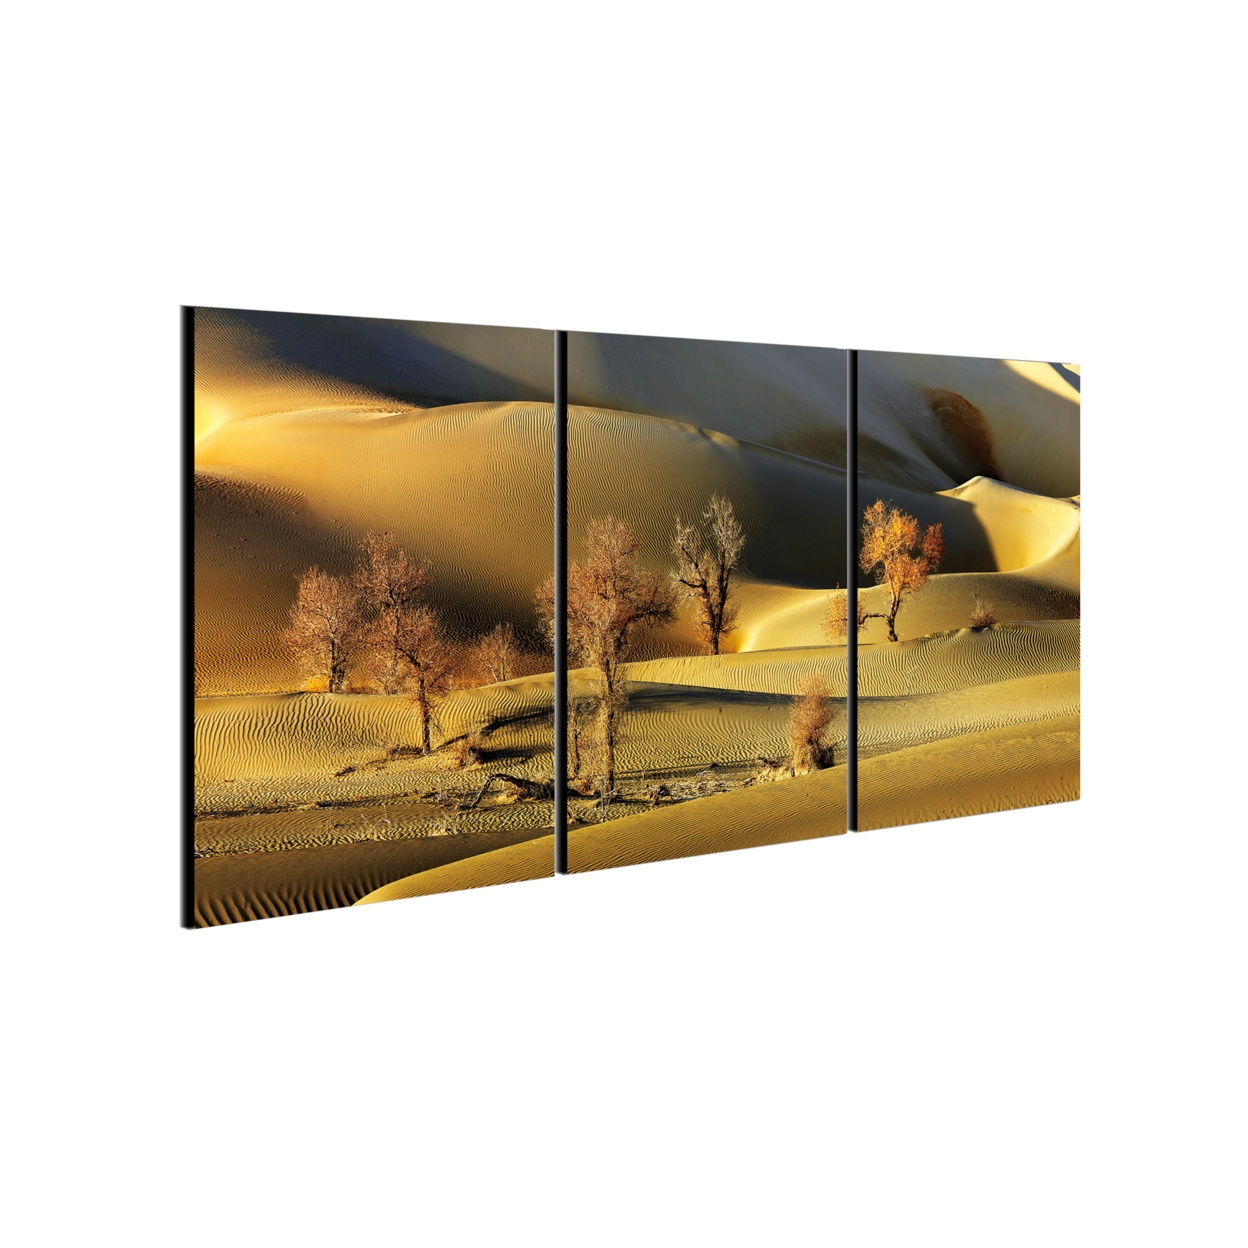 Golden Desert 3 Piece Wrapped Canvas Wall Art Print 27.5x60 Inches